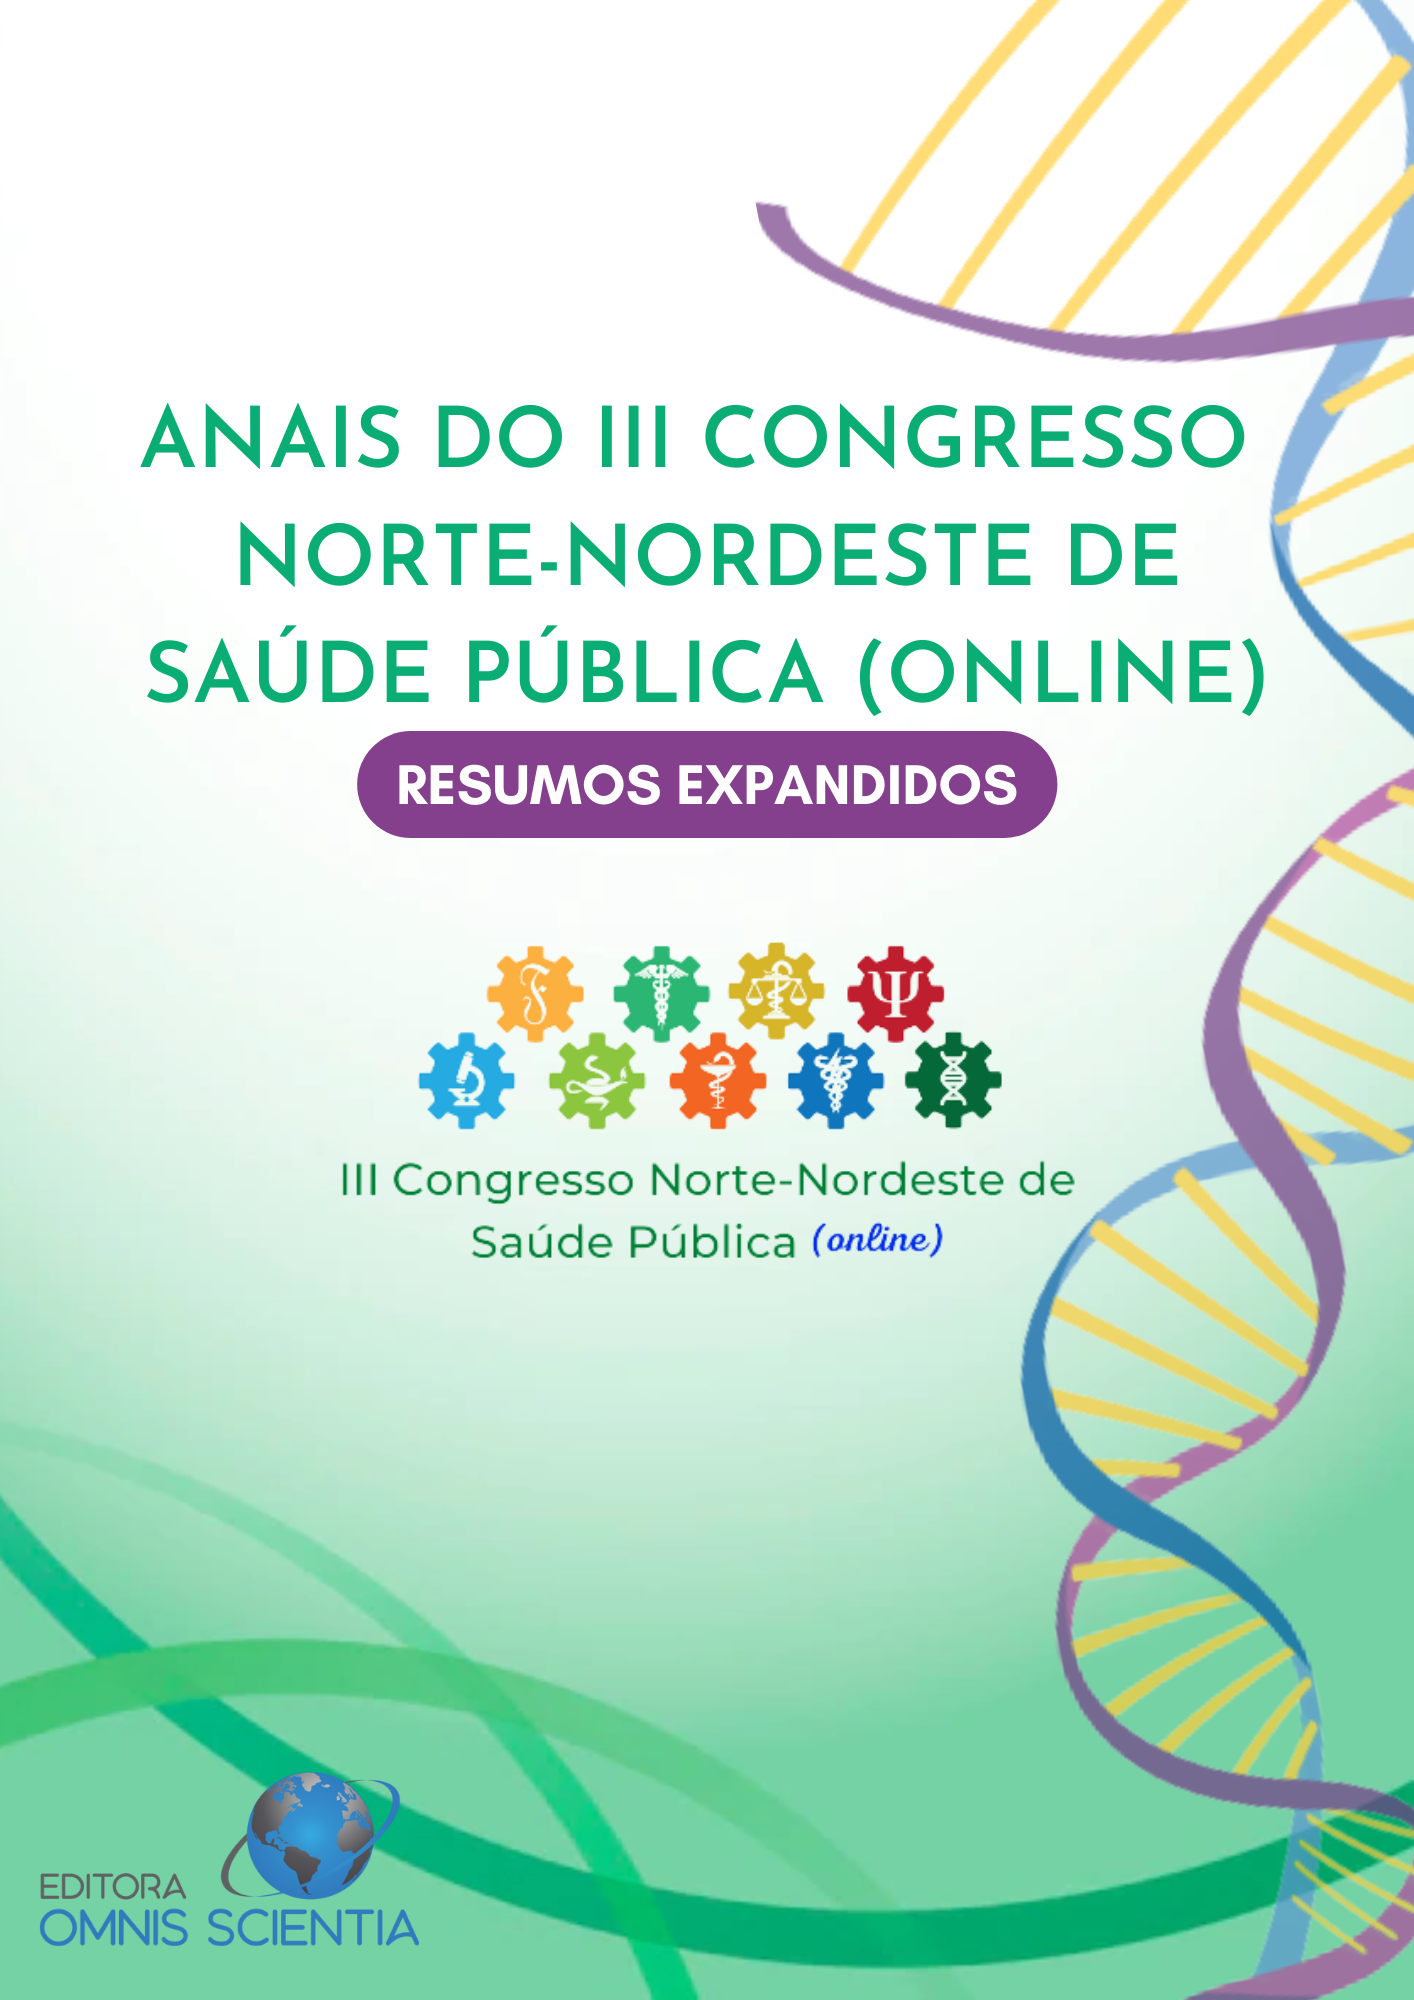 ANAIS DO III CONGRESSO NORTE-NORDESTE DE SAÚDE PÚBLICA (ONLINE) RESUMOS EXPANDIDOS